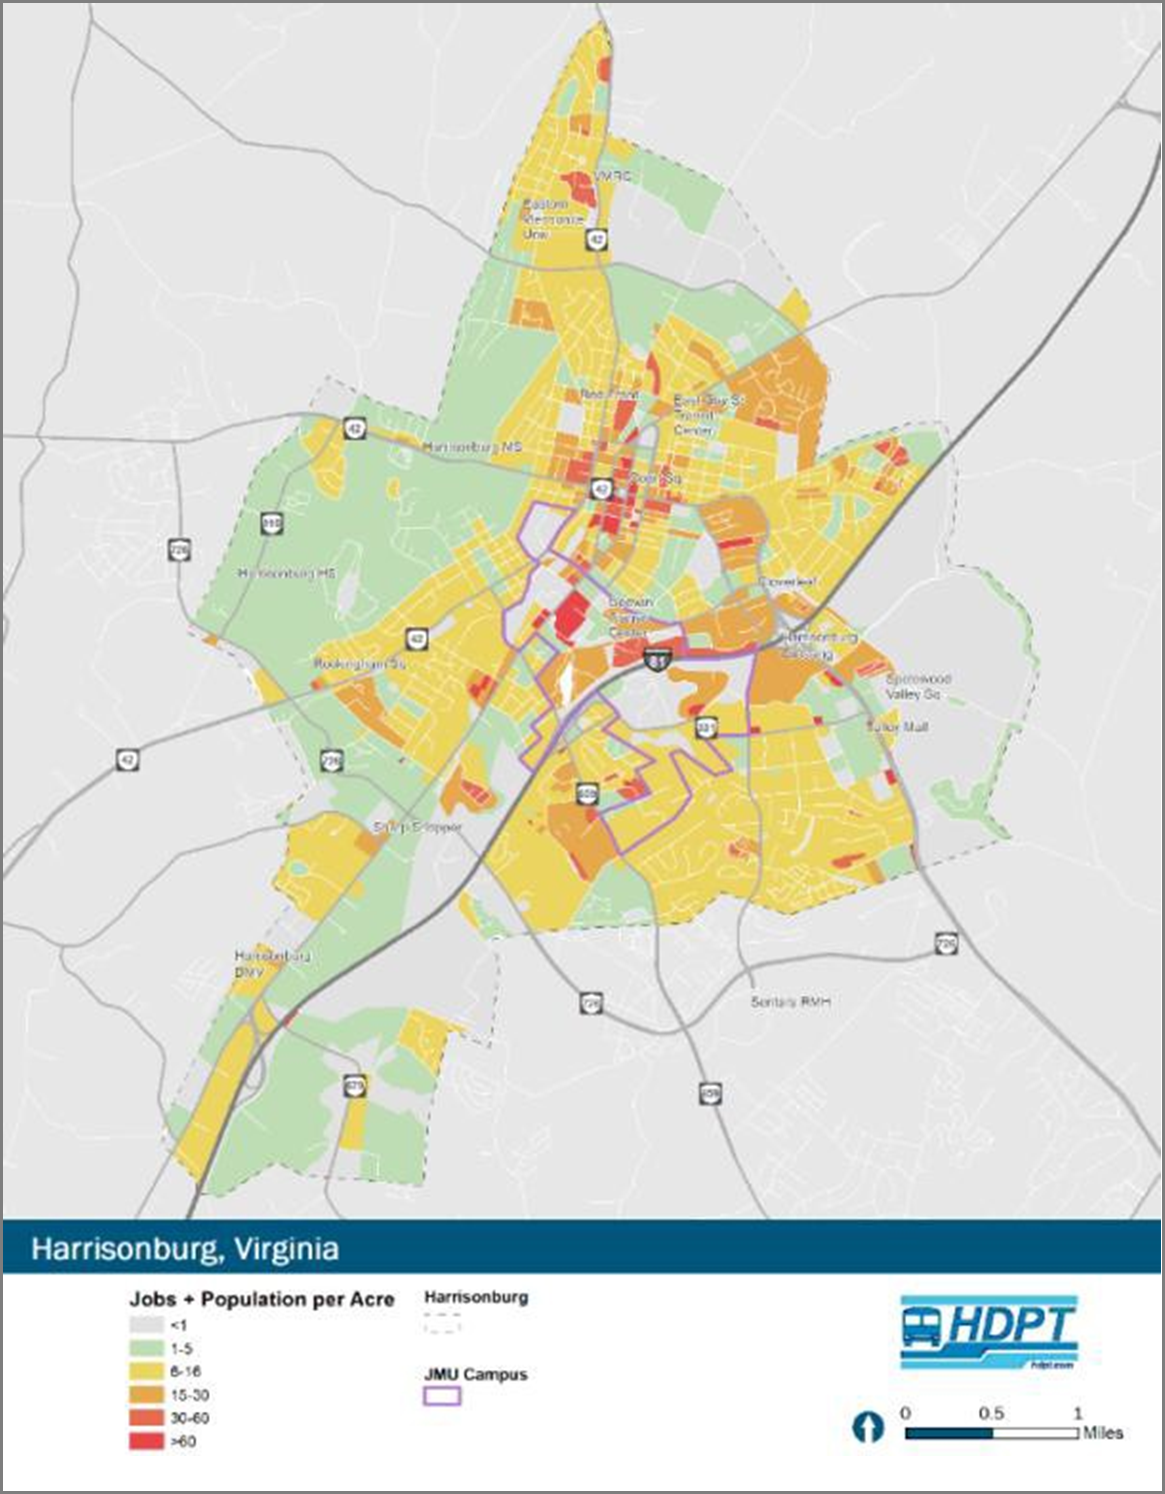 Shot showing Jobs and Population Density, Harrisonburg.